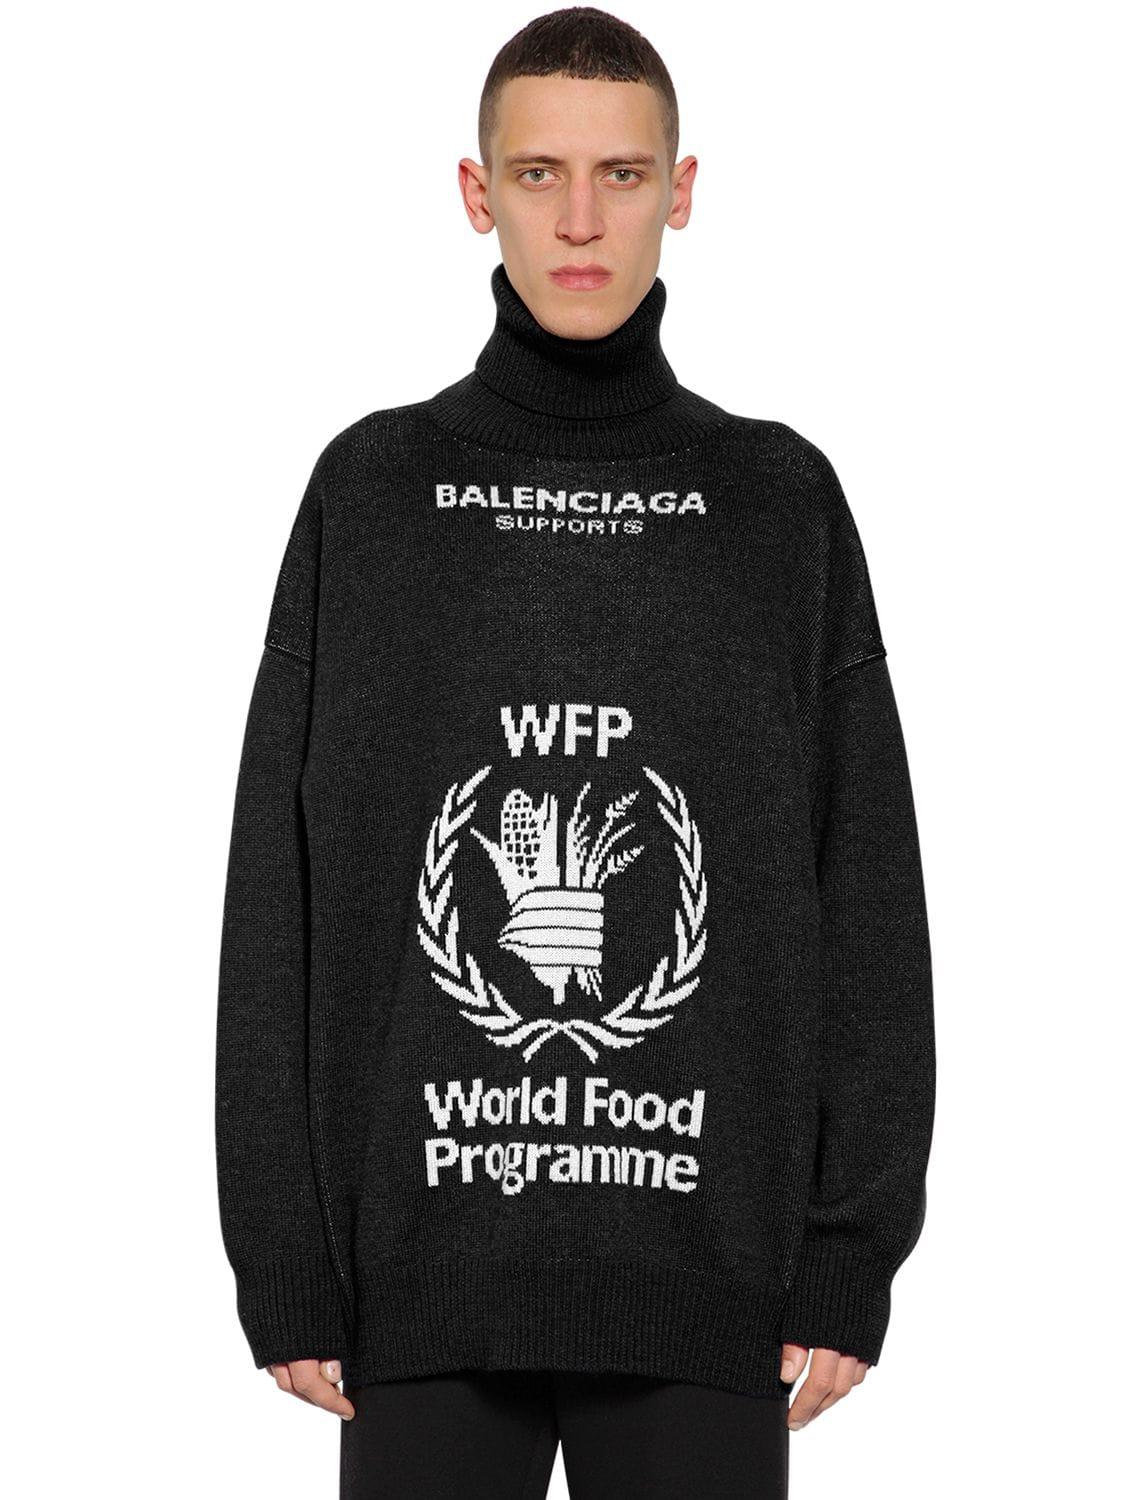 Balenciaga World Food Programme Sweater 